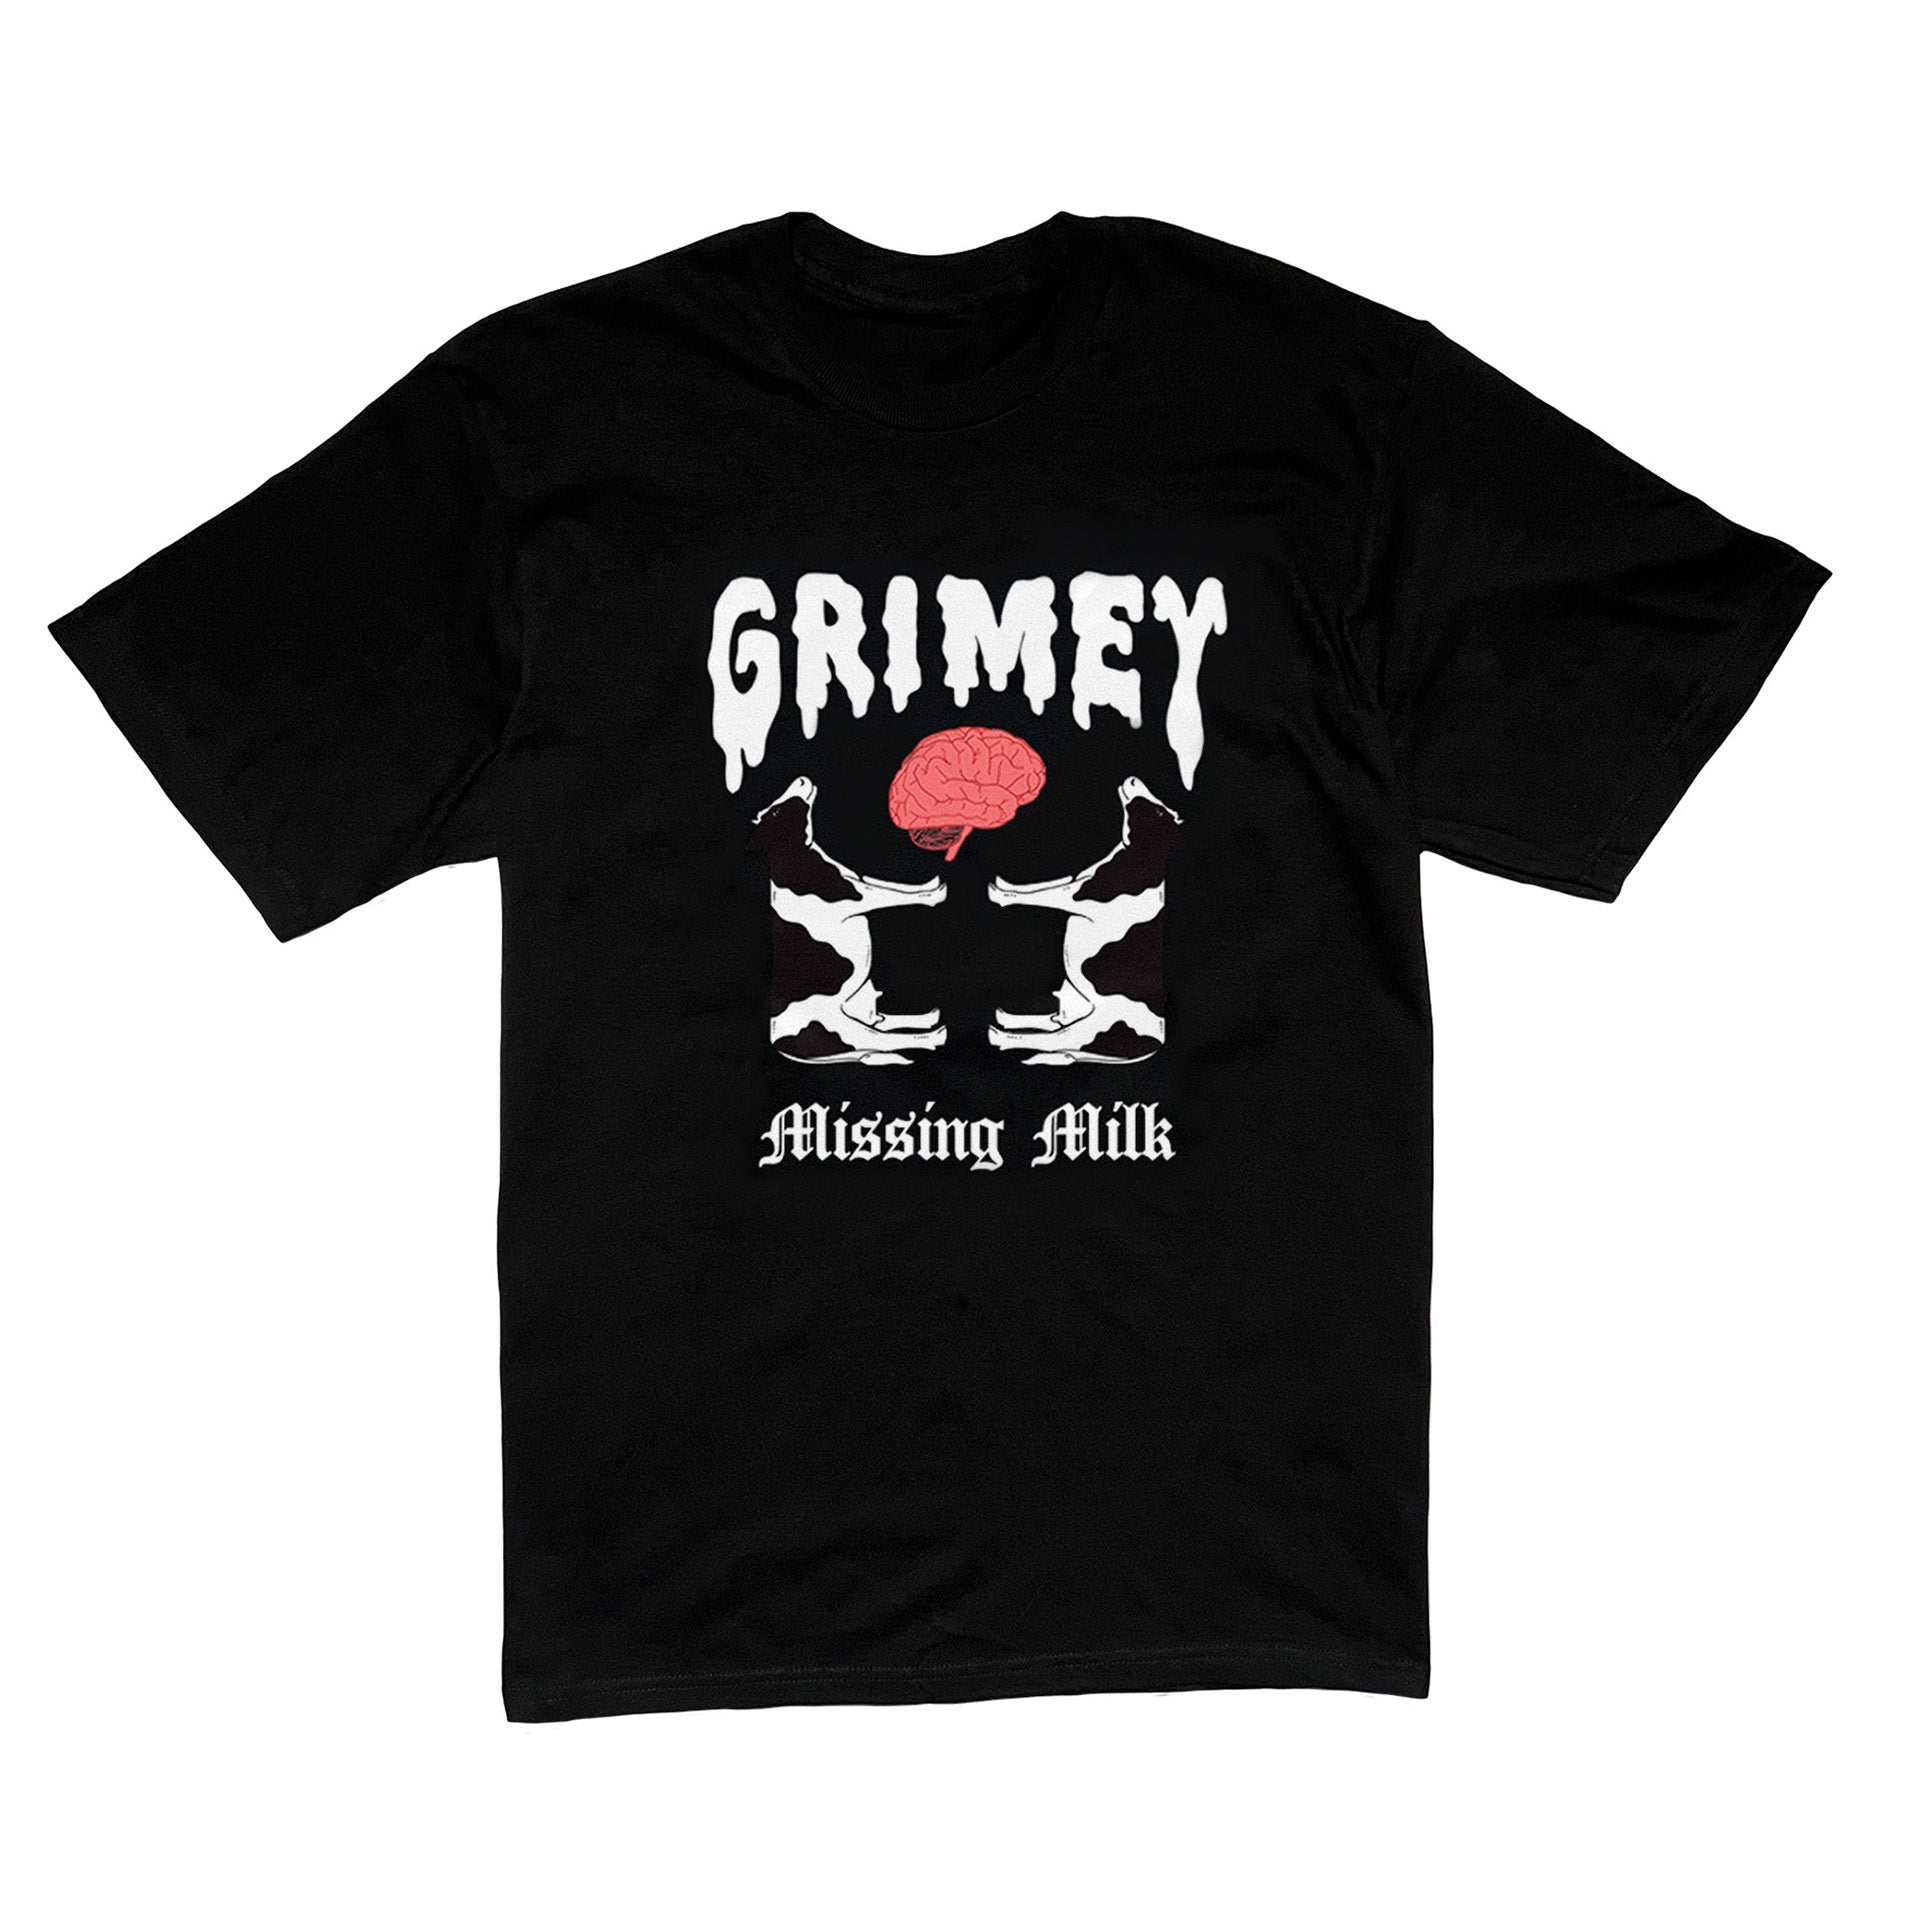 Grimey 'Missing Milk' T-Shirt